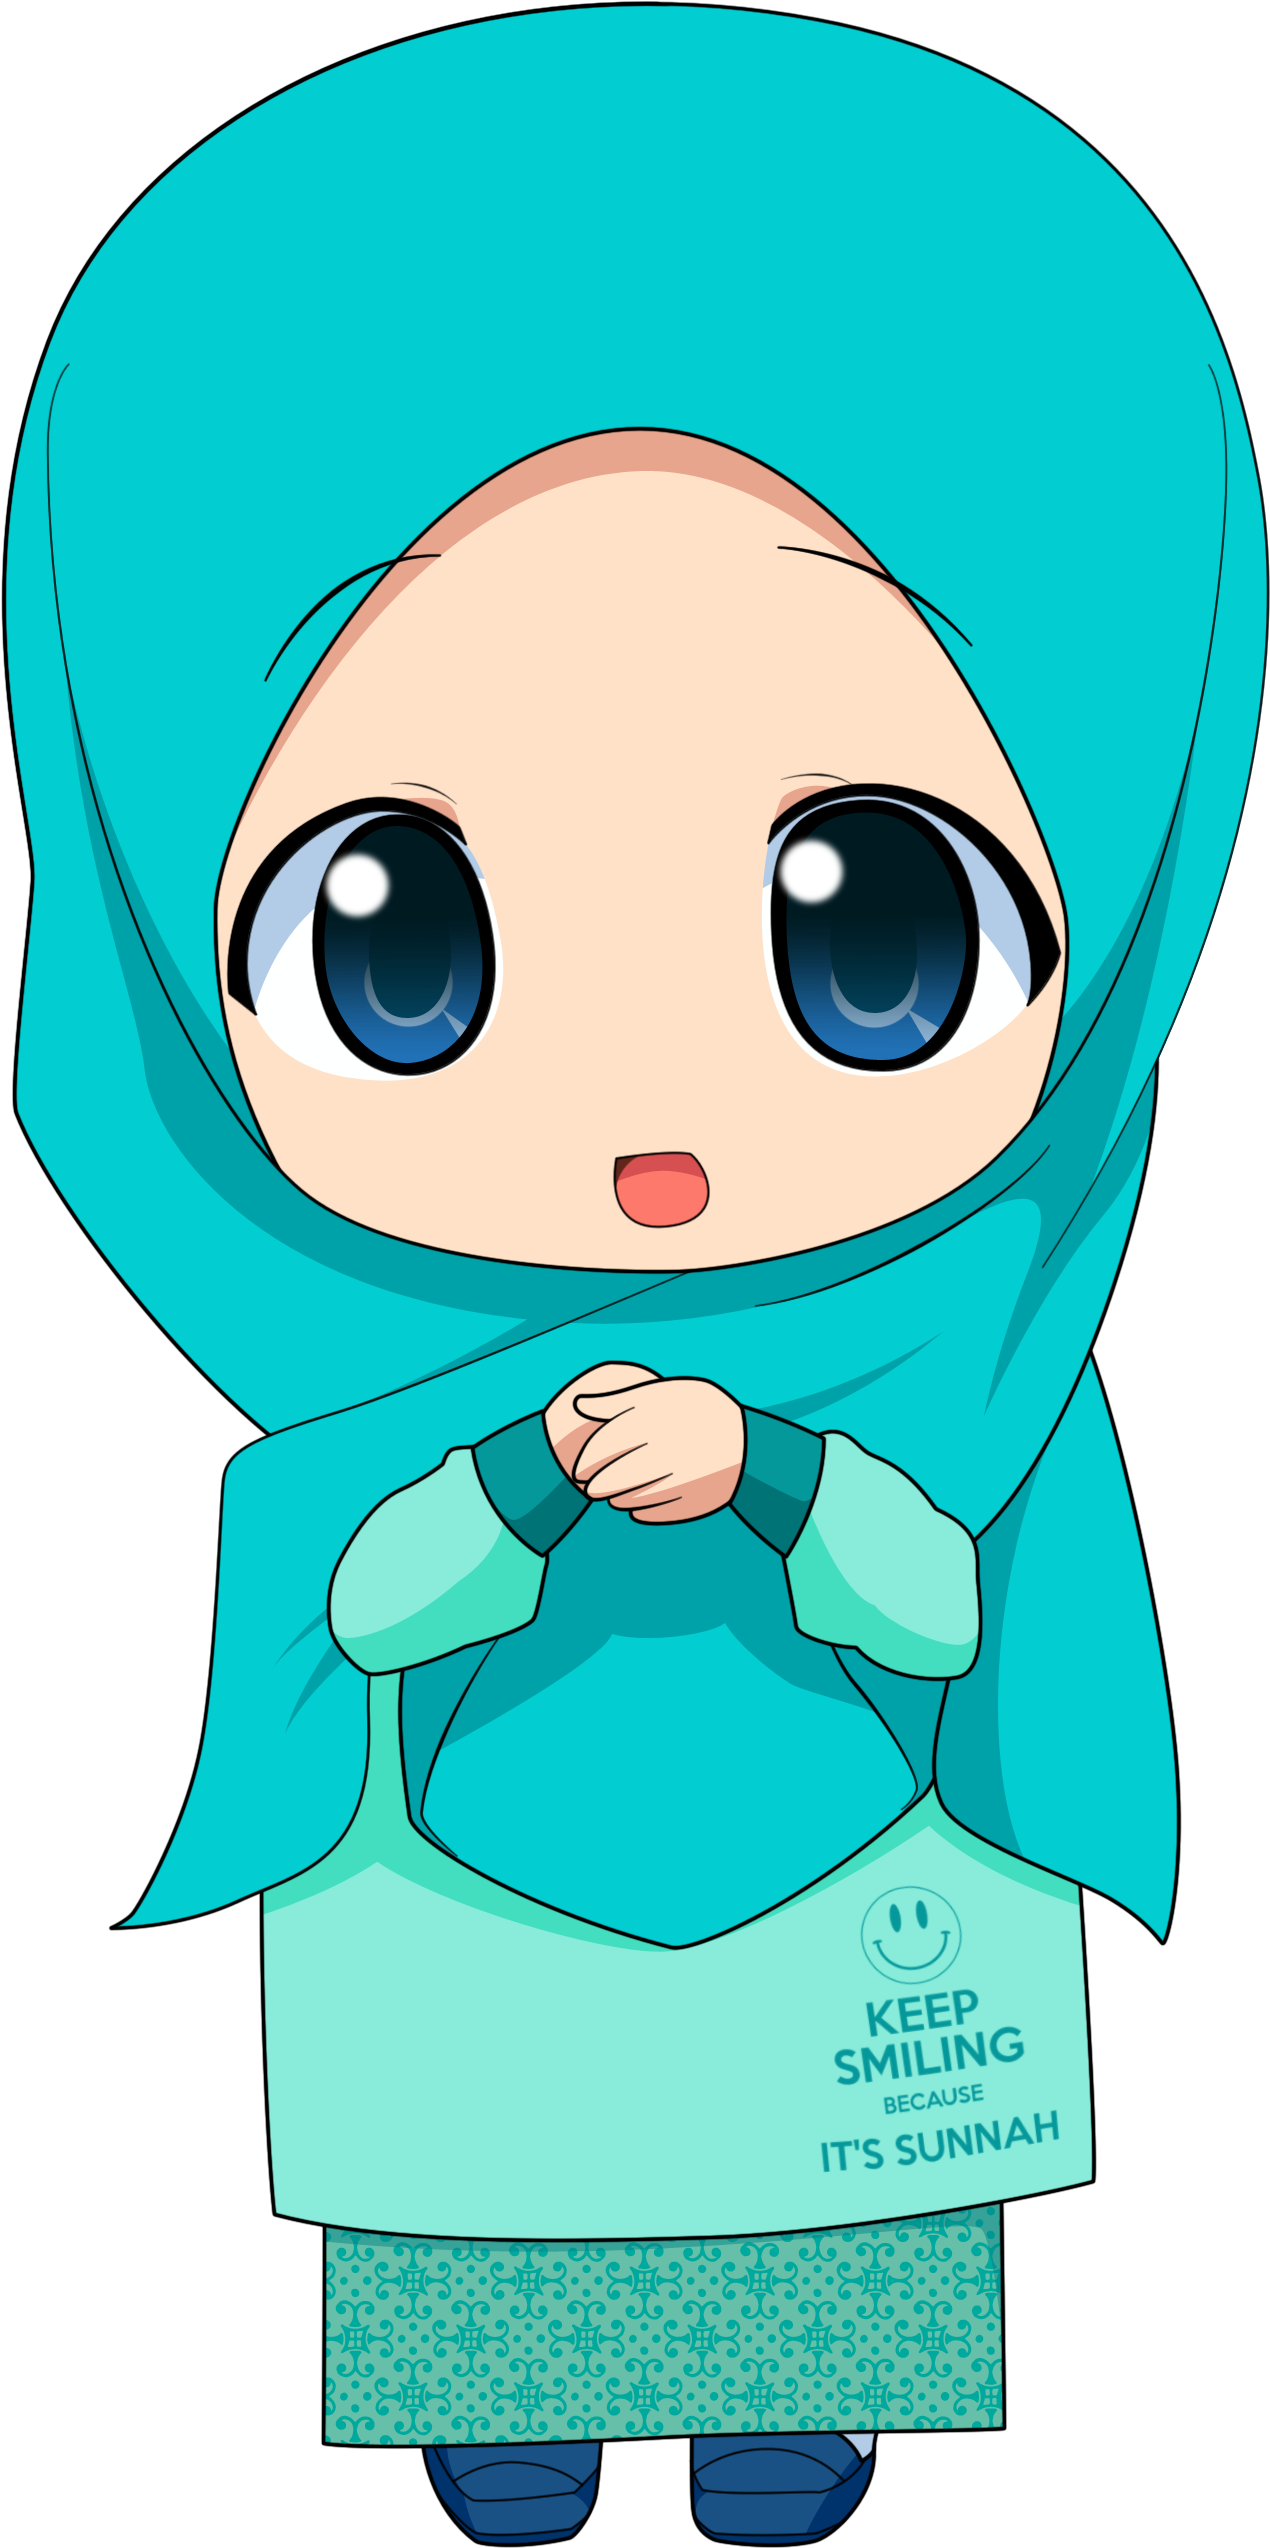 Animated Hijab Girl Smiling Sunnah